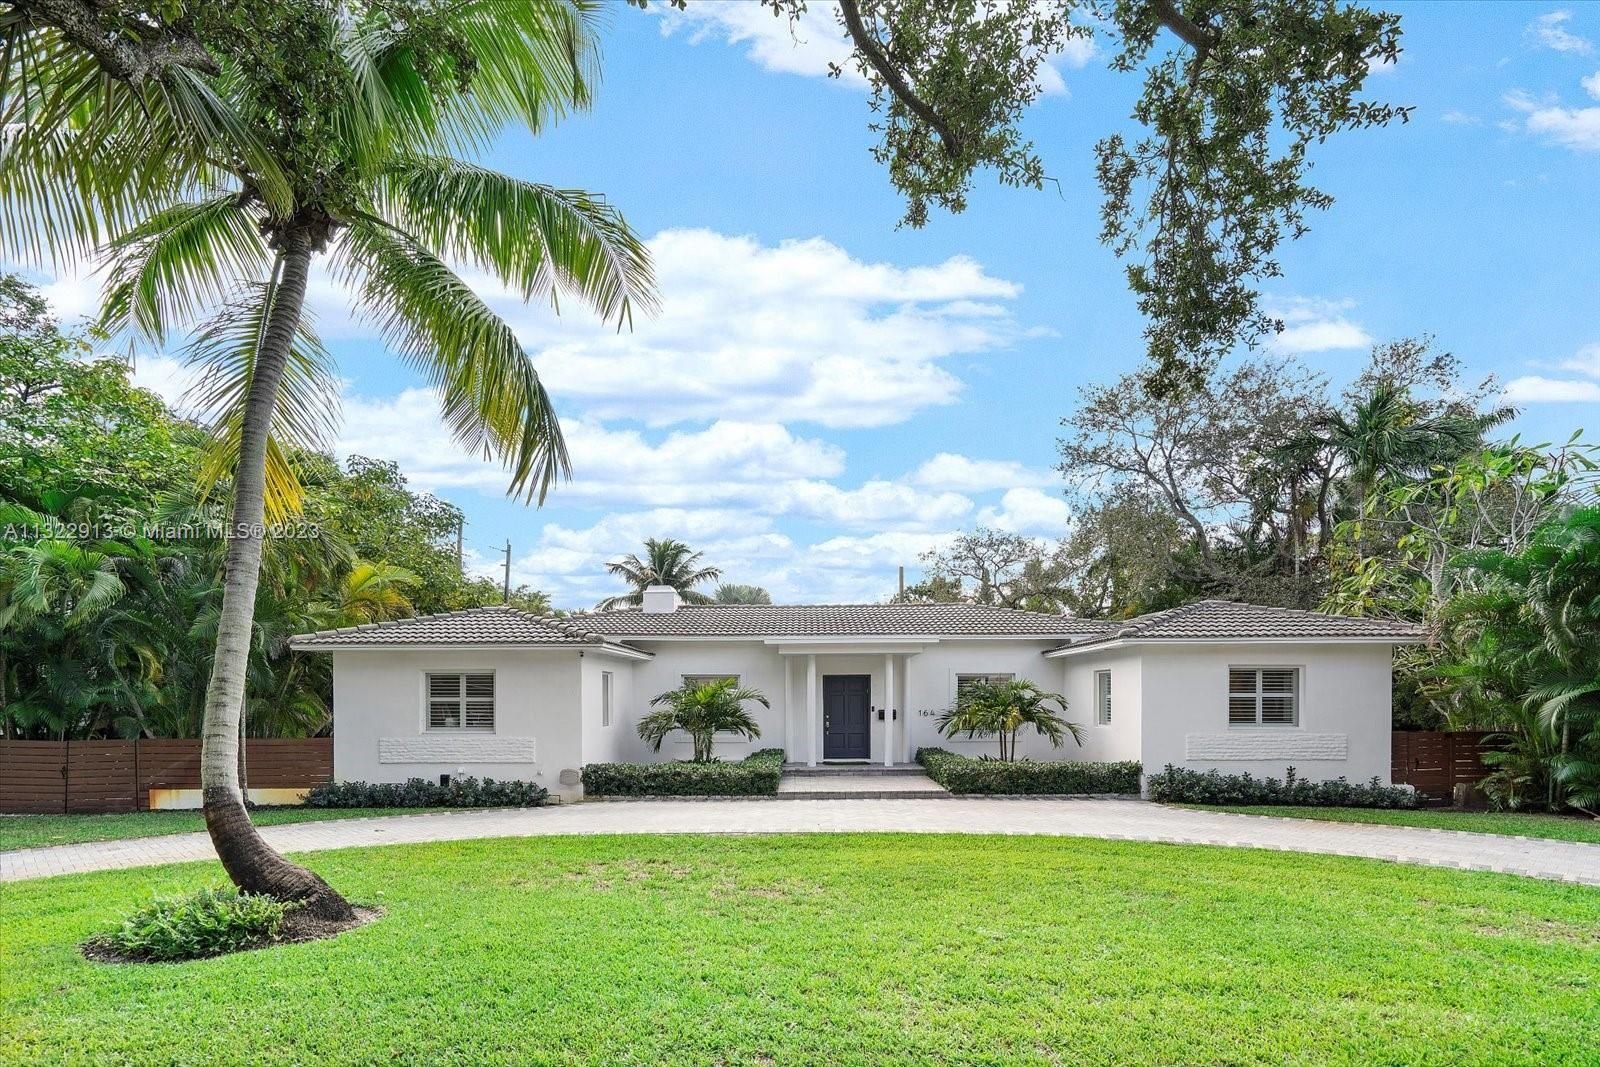 Real estate property located at 164 105th St, Miami-Dade County, Miami Shores, FL